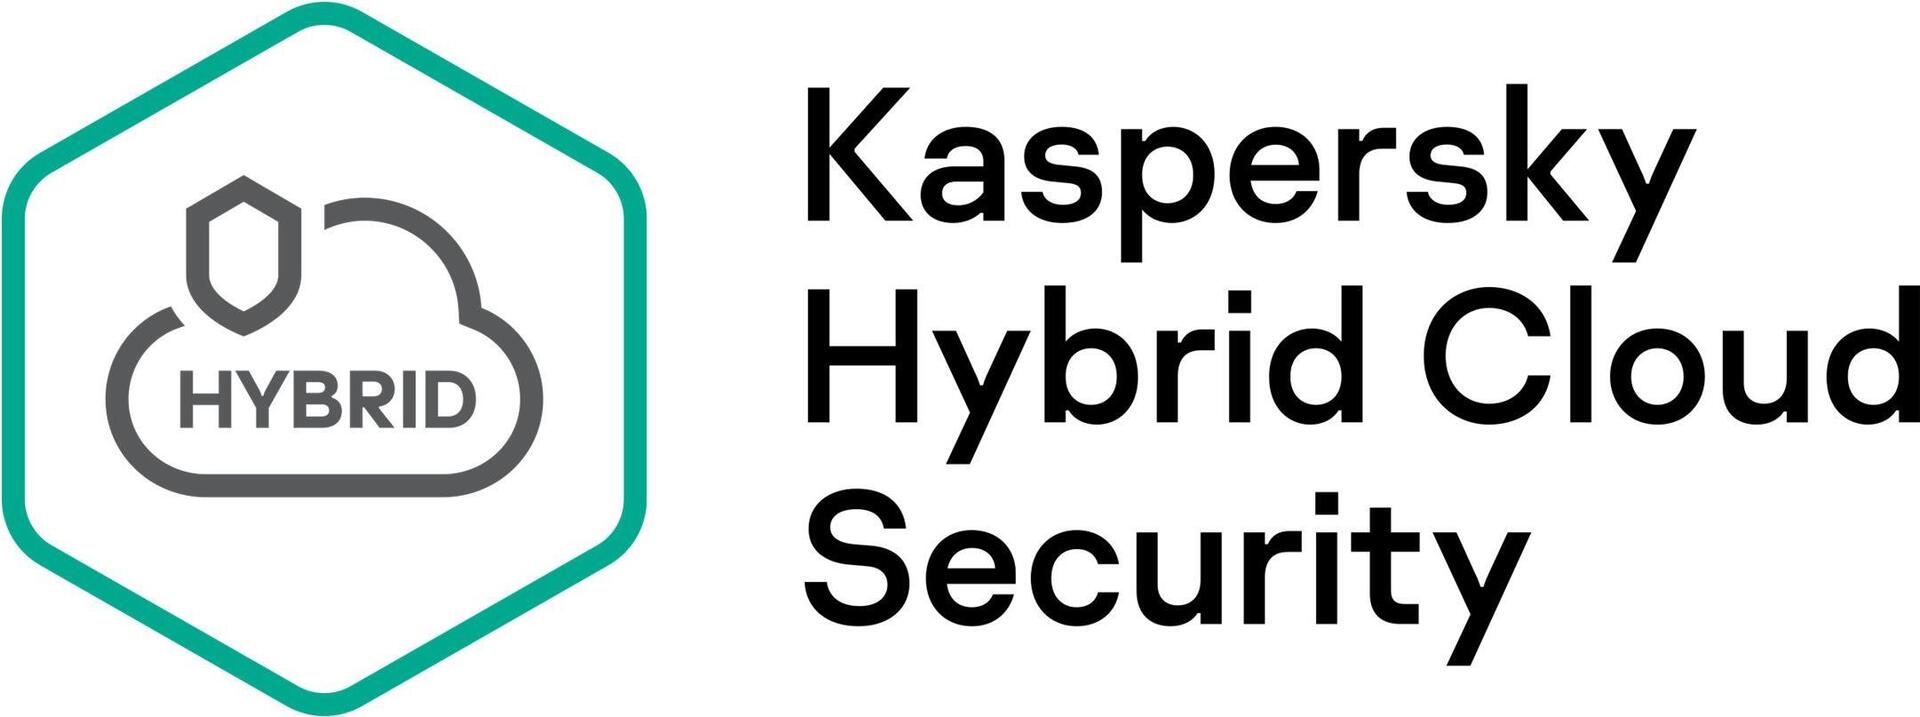 Kaspersky Hybrid Cloud Security (KL4554XAMF9)